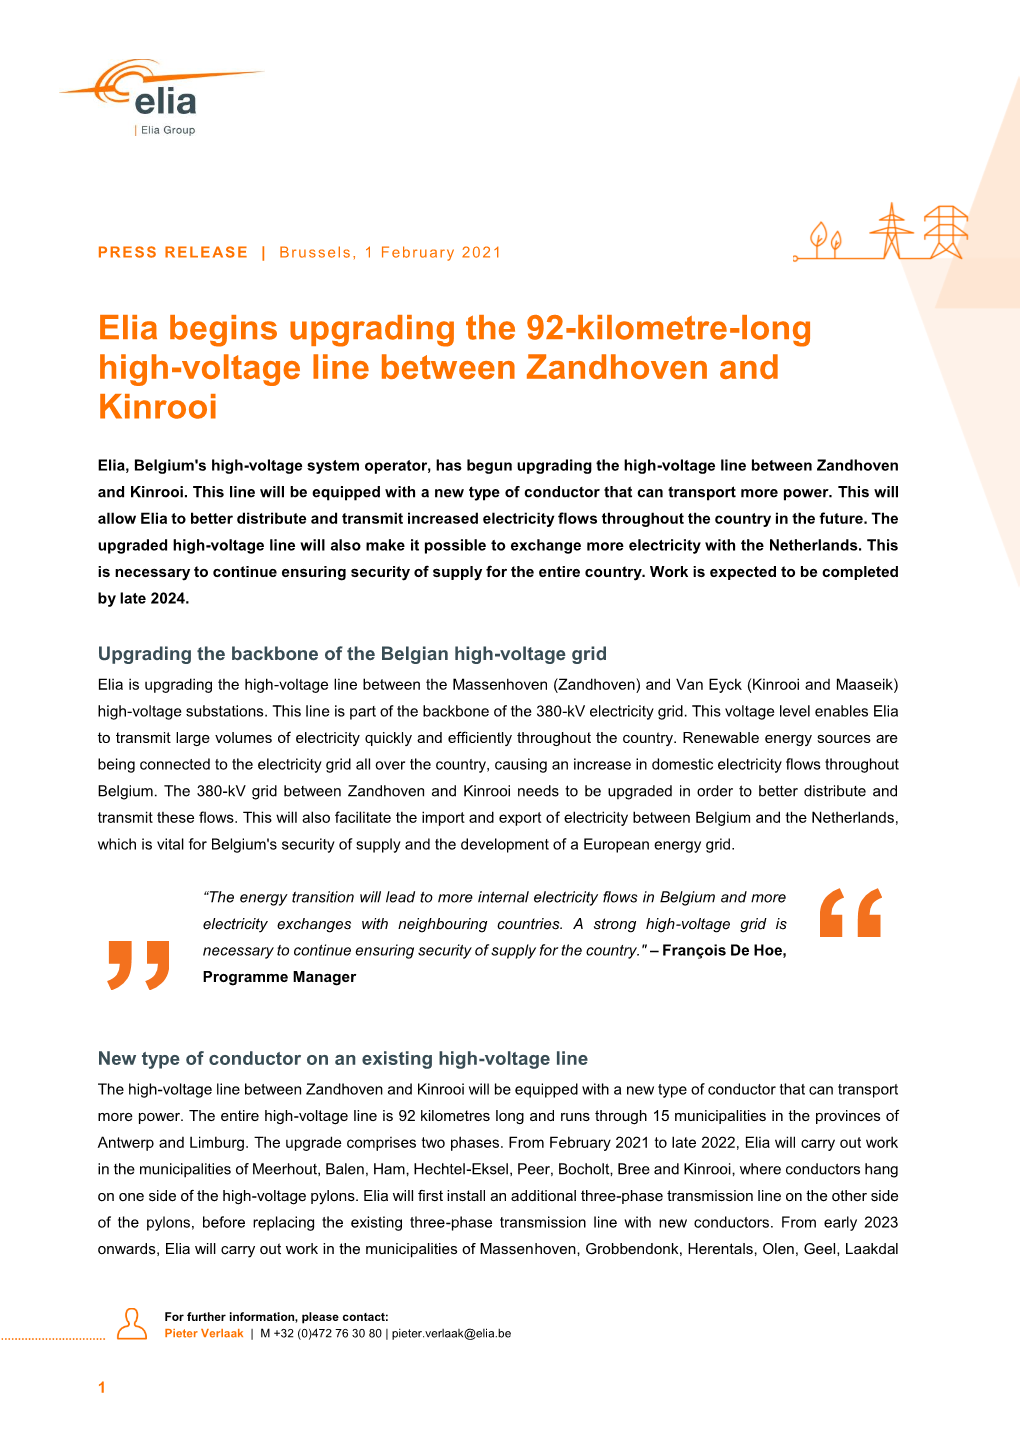 Elia Begins Upgrading the 92-Kilometre-Long High-Voltage Line Between Zandhoven and Kinrooi